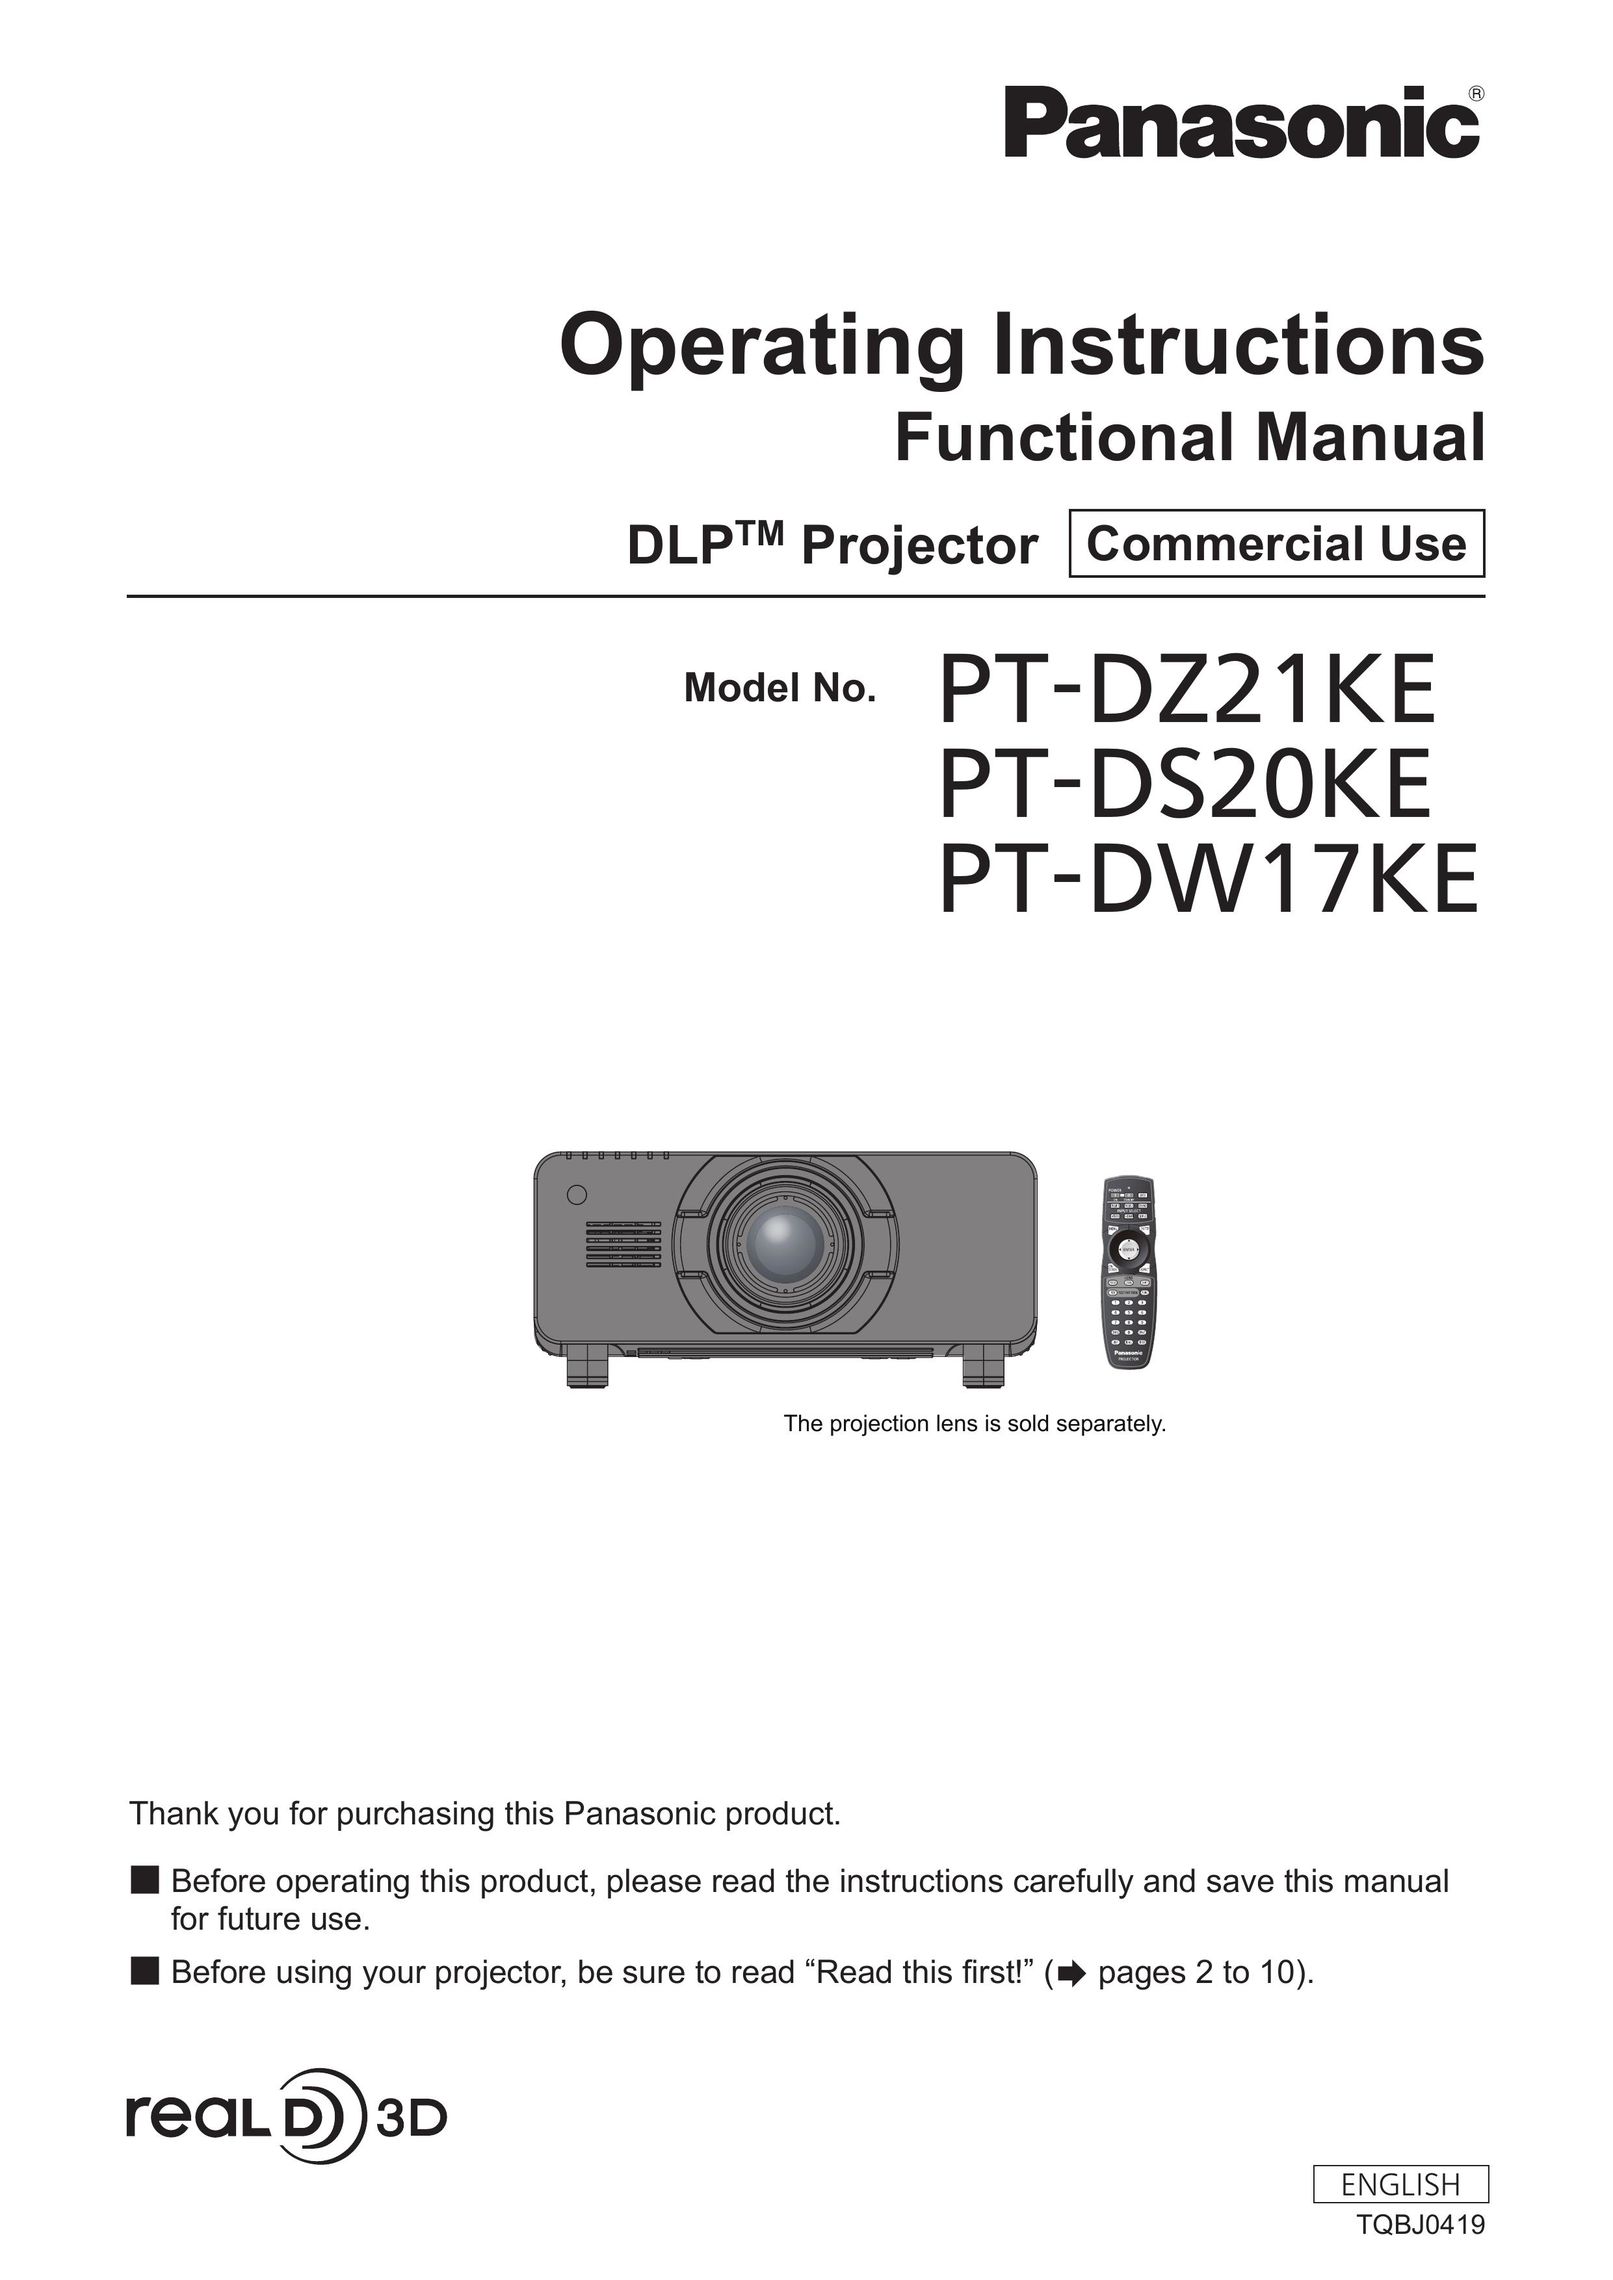 Panasonic PT-DS20KE Home Theater Screen User Manual